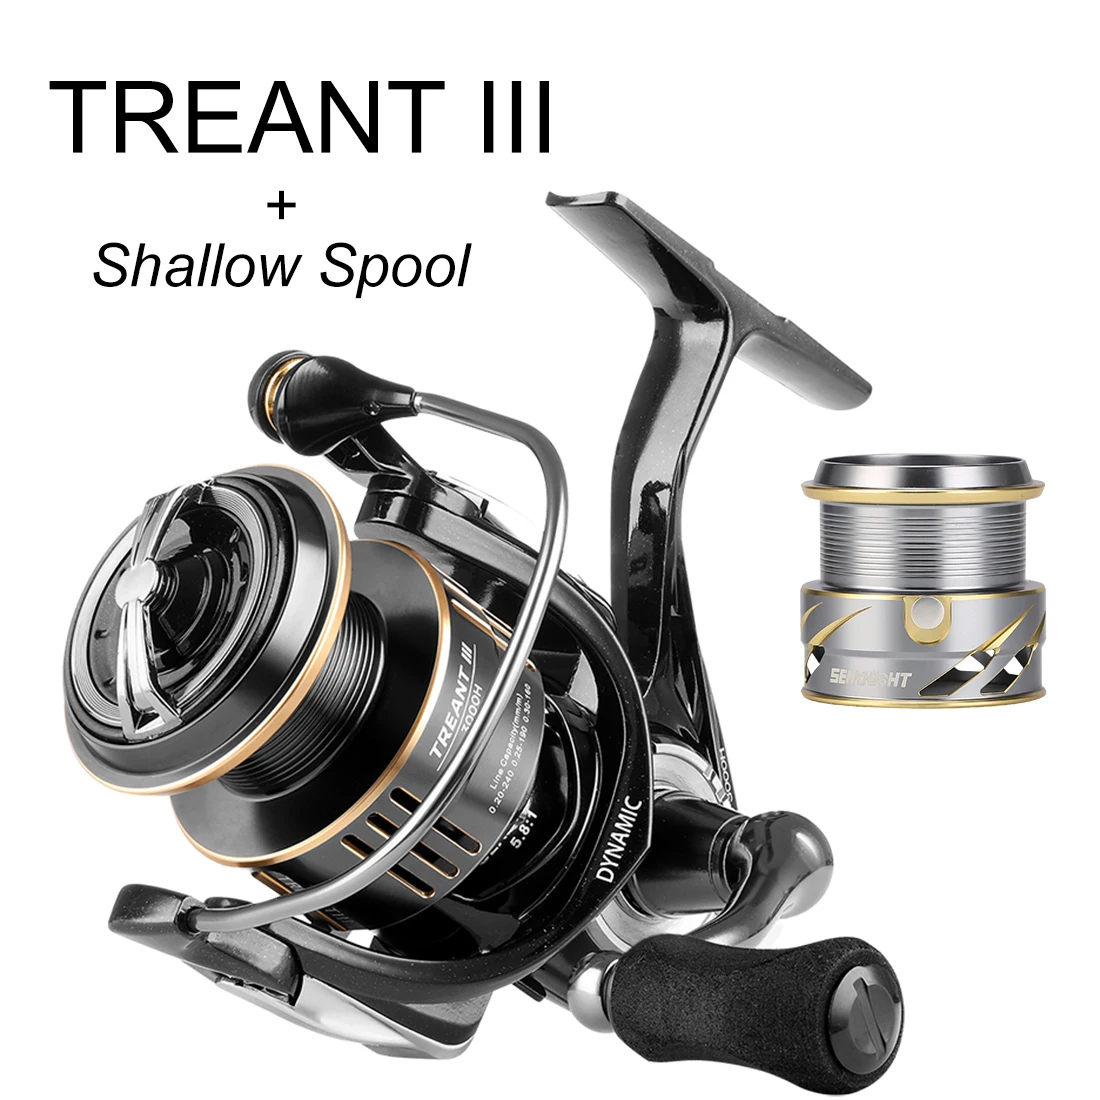 SeaKnight Brand TREANT III Series Fishing Reels 1000H-6000H 5.0:1